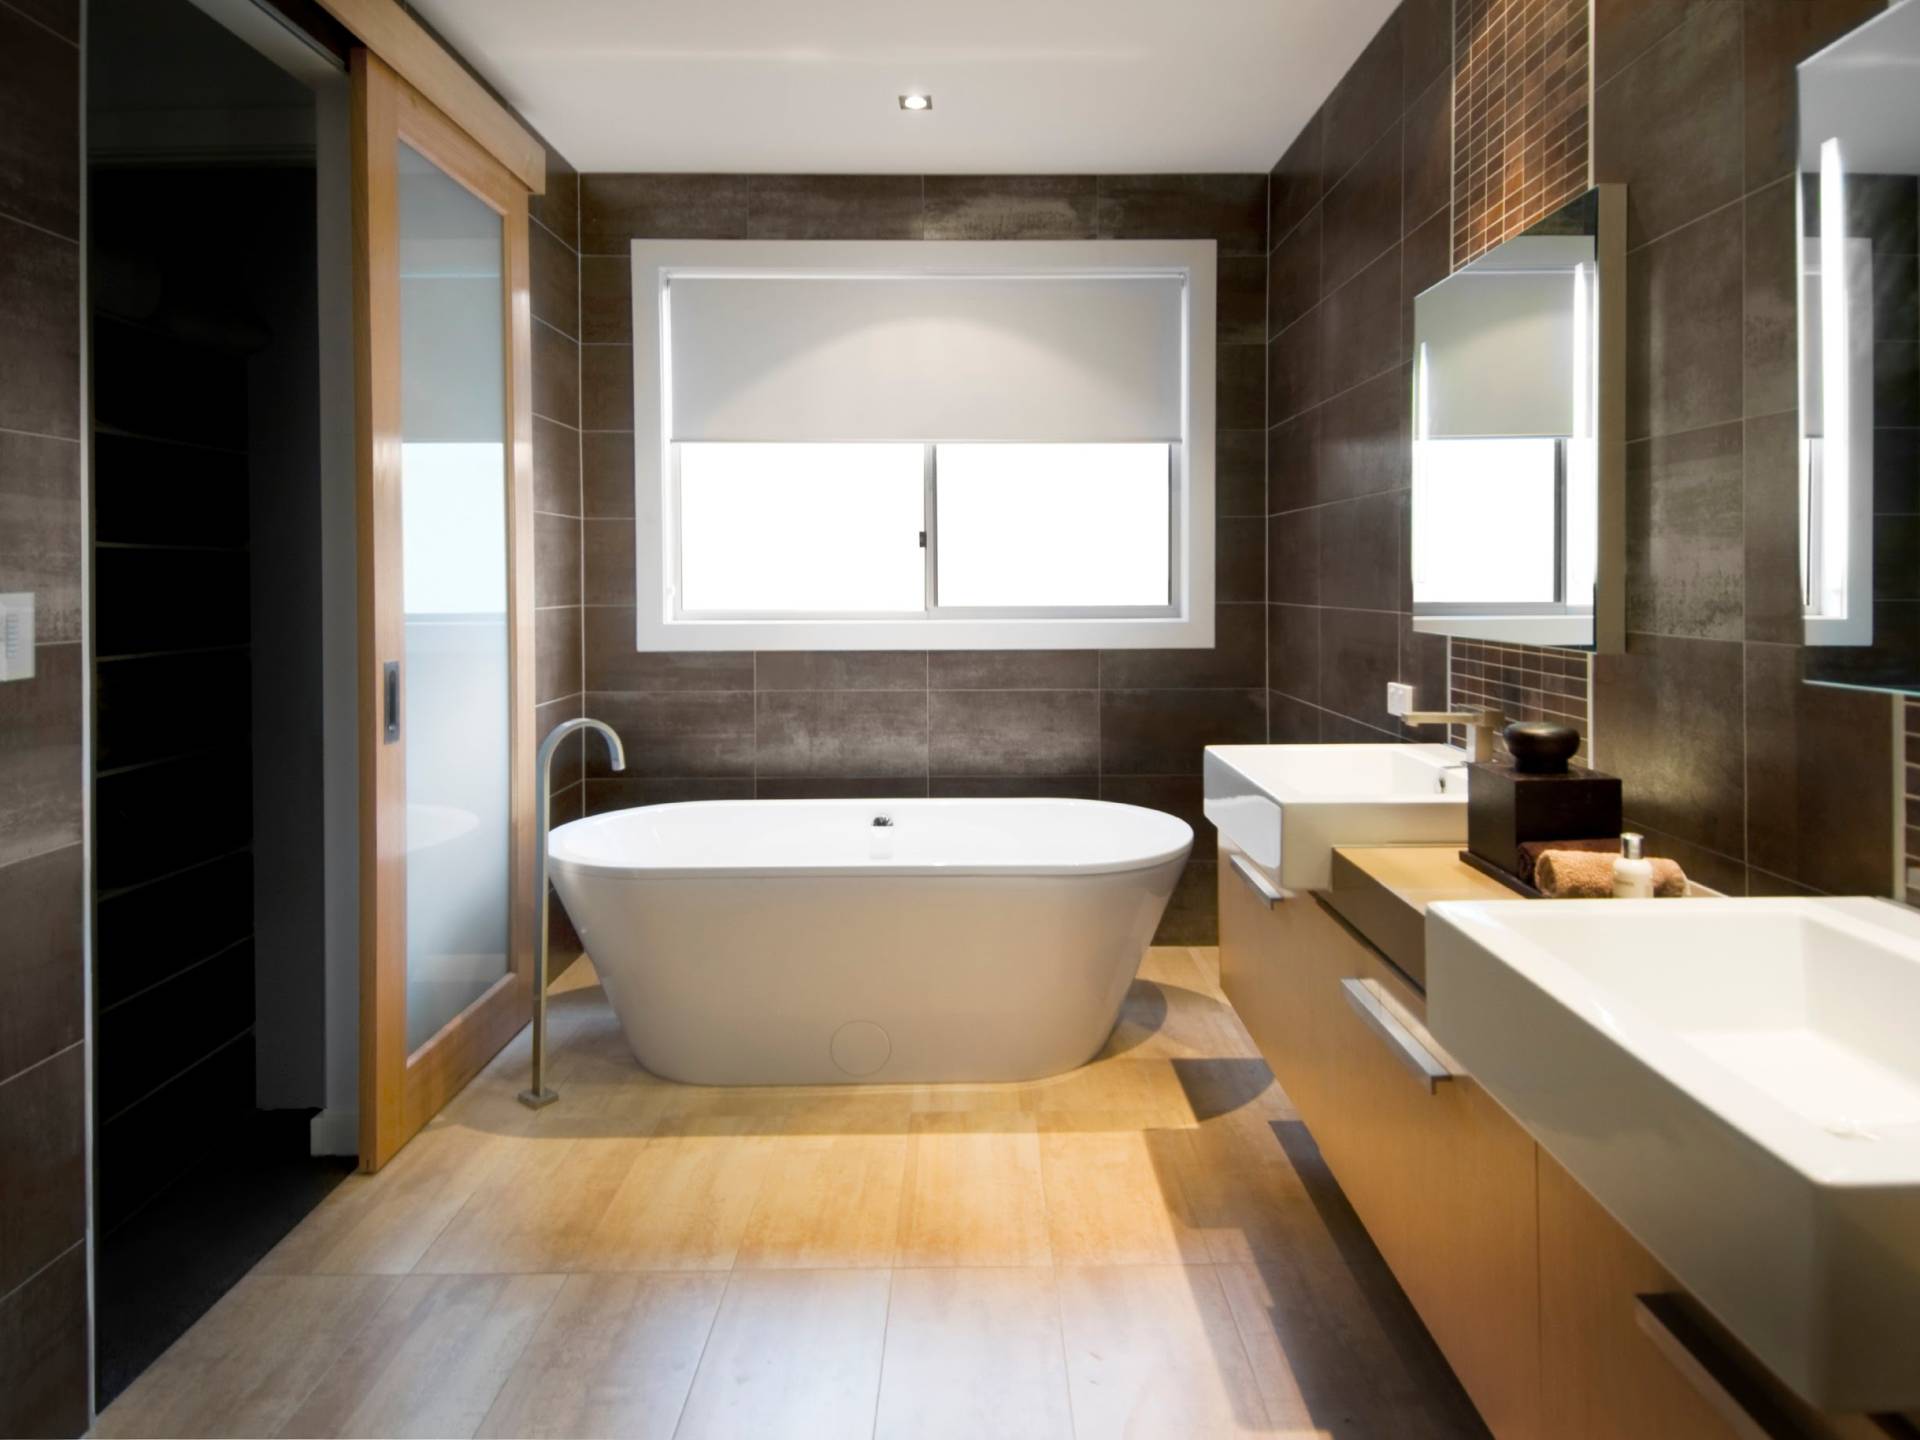 Bathroom Interior Design Ideas and Bathroom Interior Tile